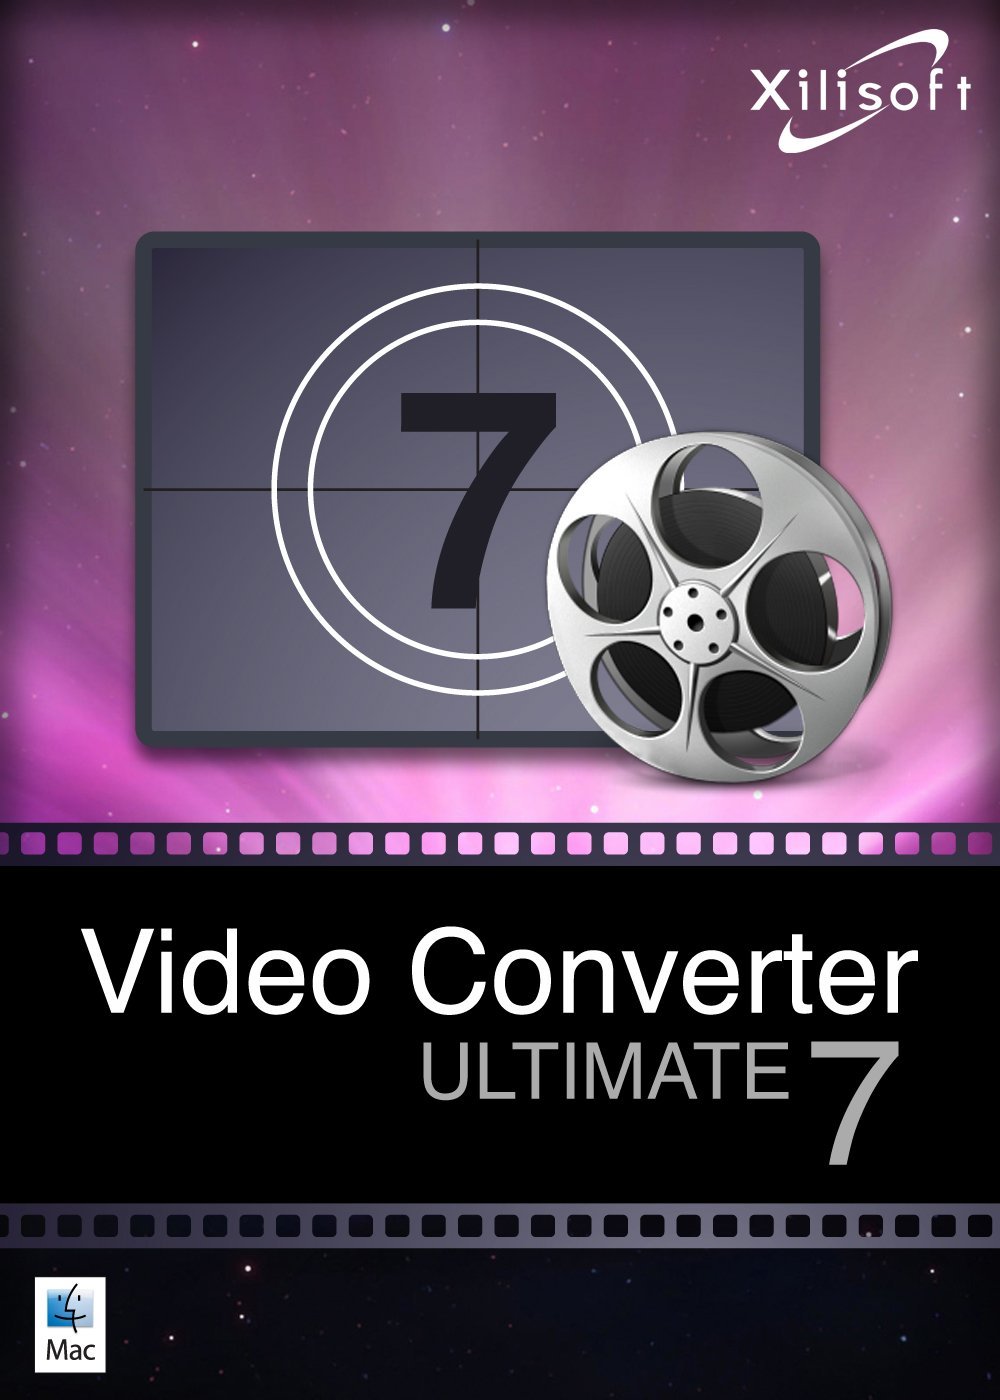 Xilisoft video converter ultimate serial key free download